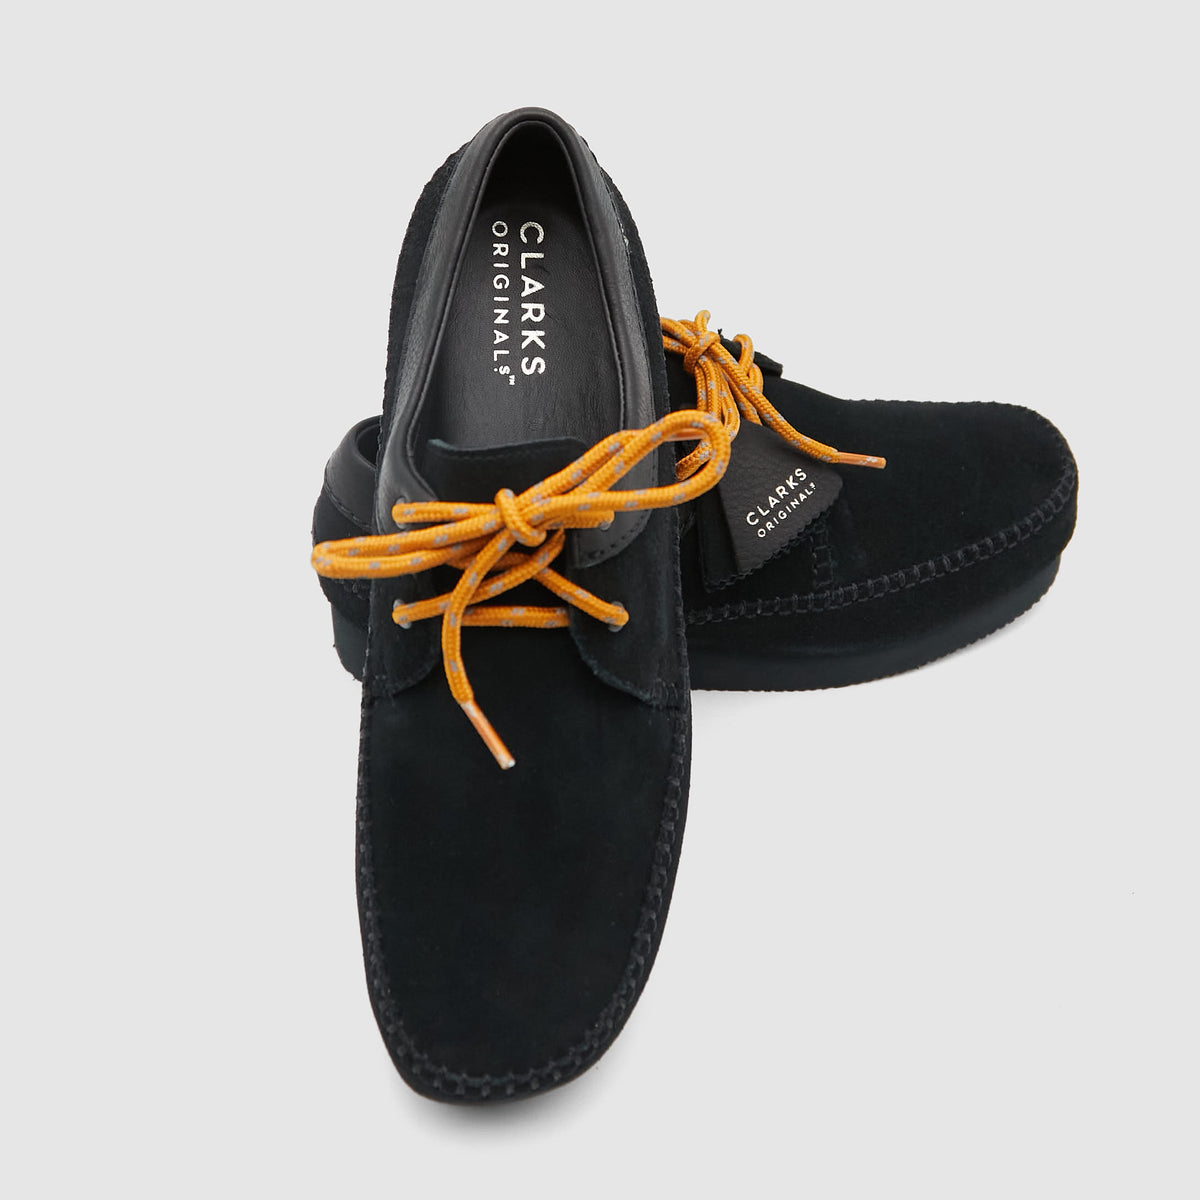 Clarks Weaver GORE-TEX® Shoe